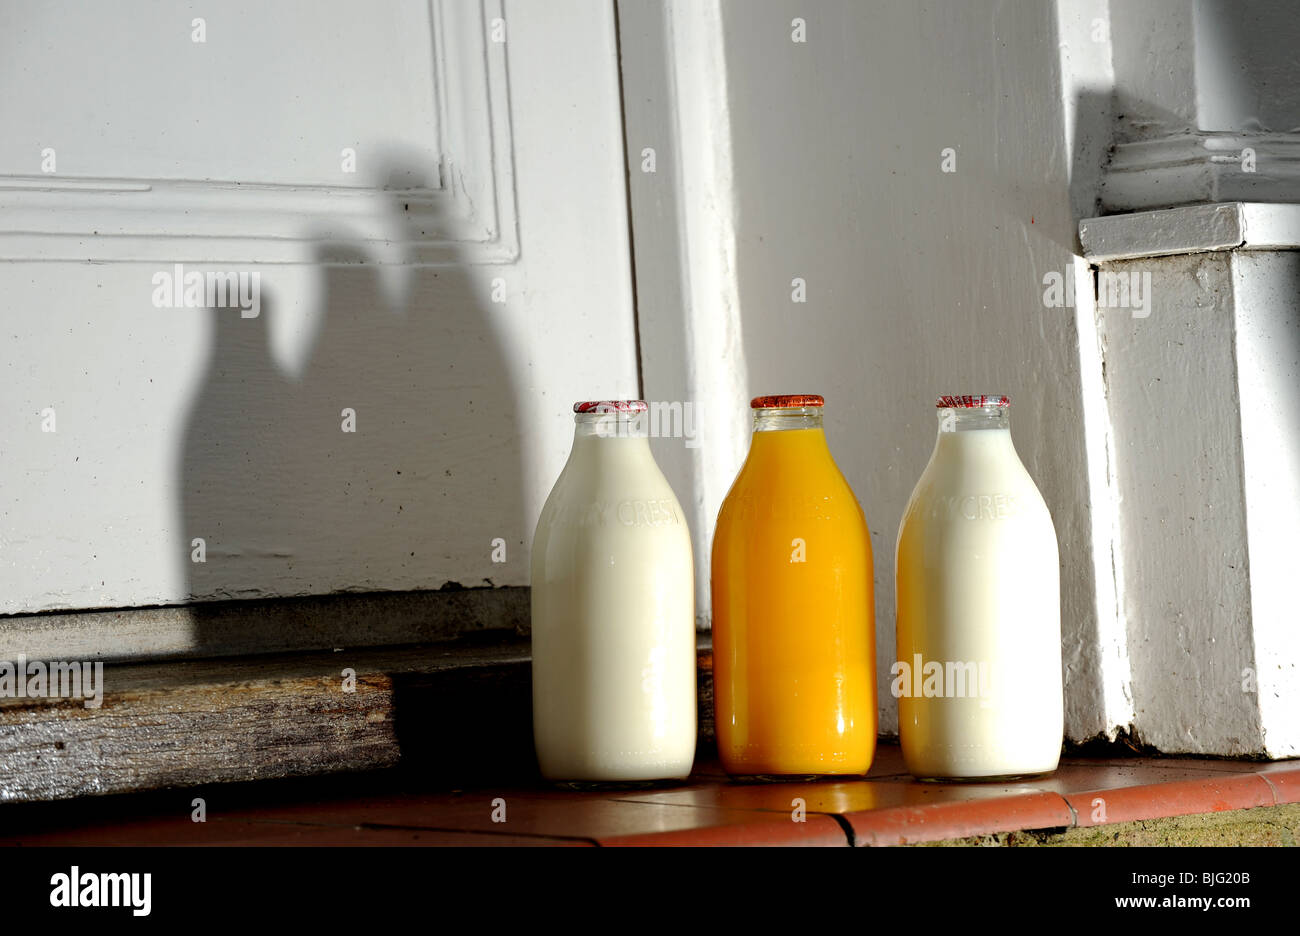 Bottles of milk and orange juice on a doorstep delivered by milkman UK Stock Photo